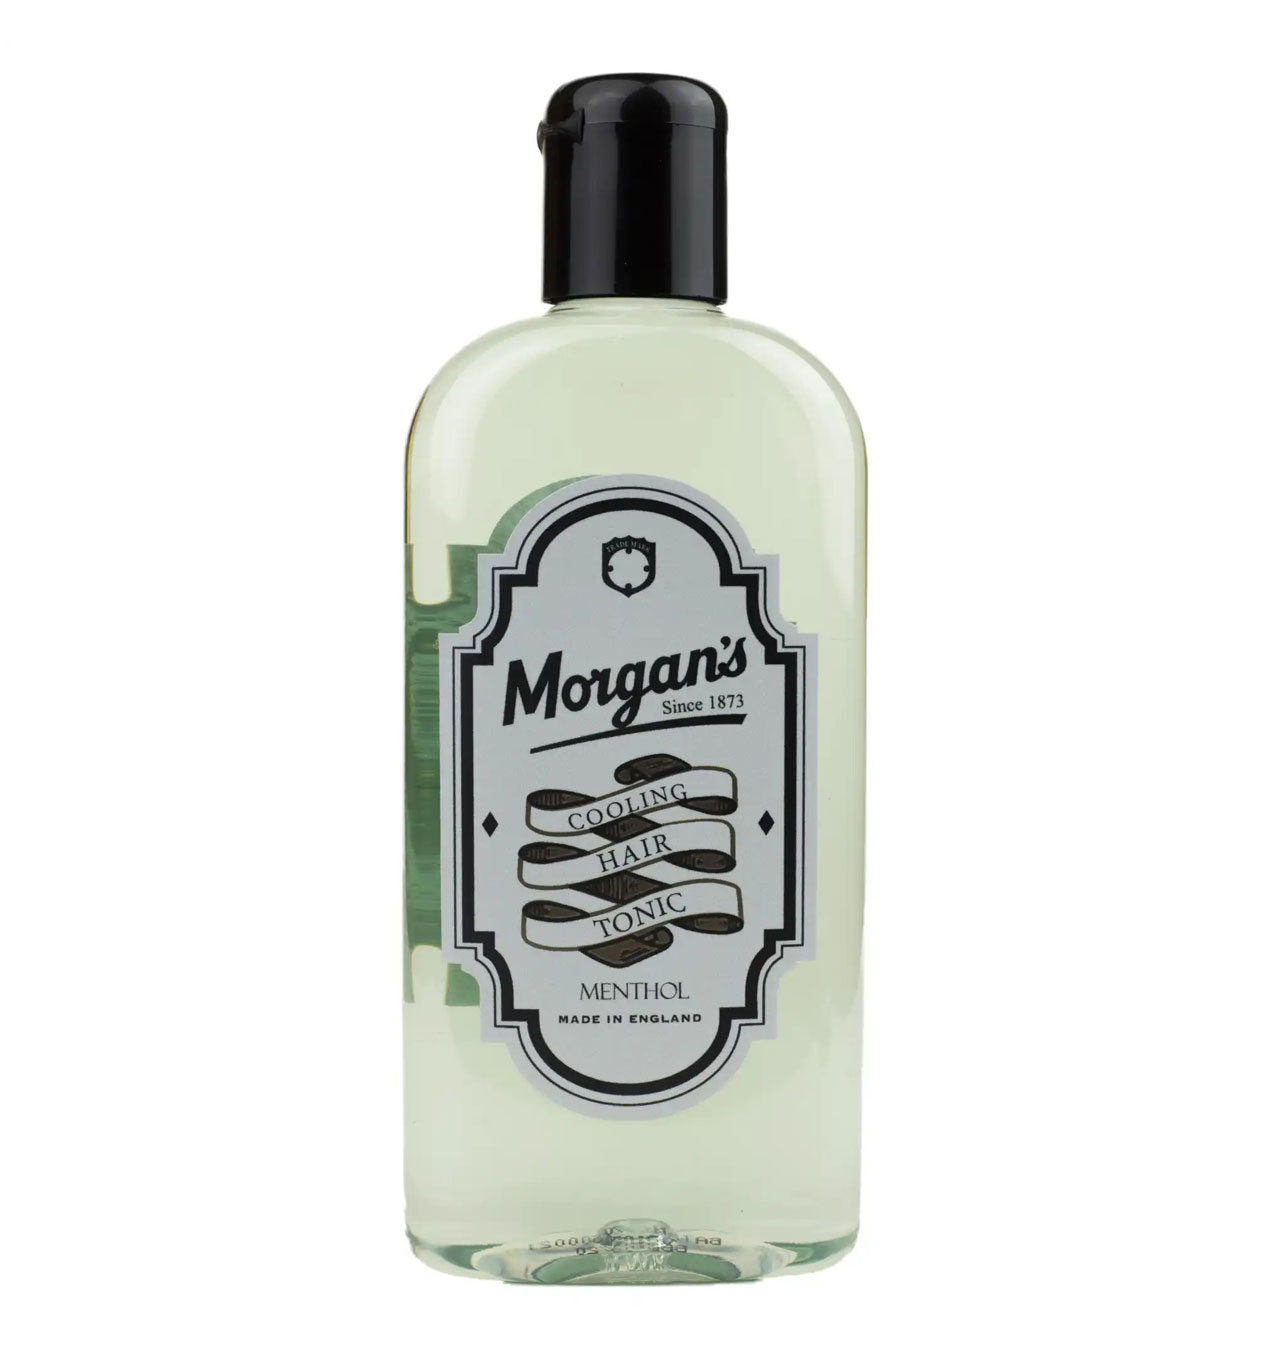 Morgans---Menthol-Cooling-Hair-Tonic